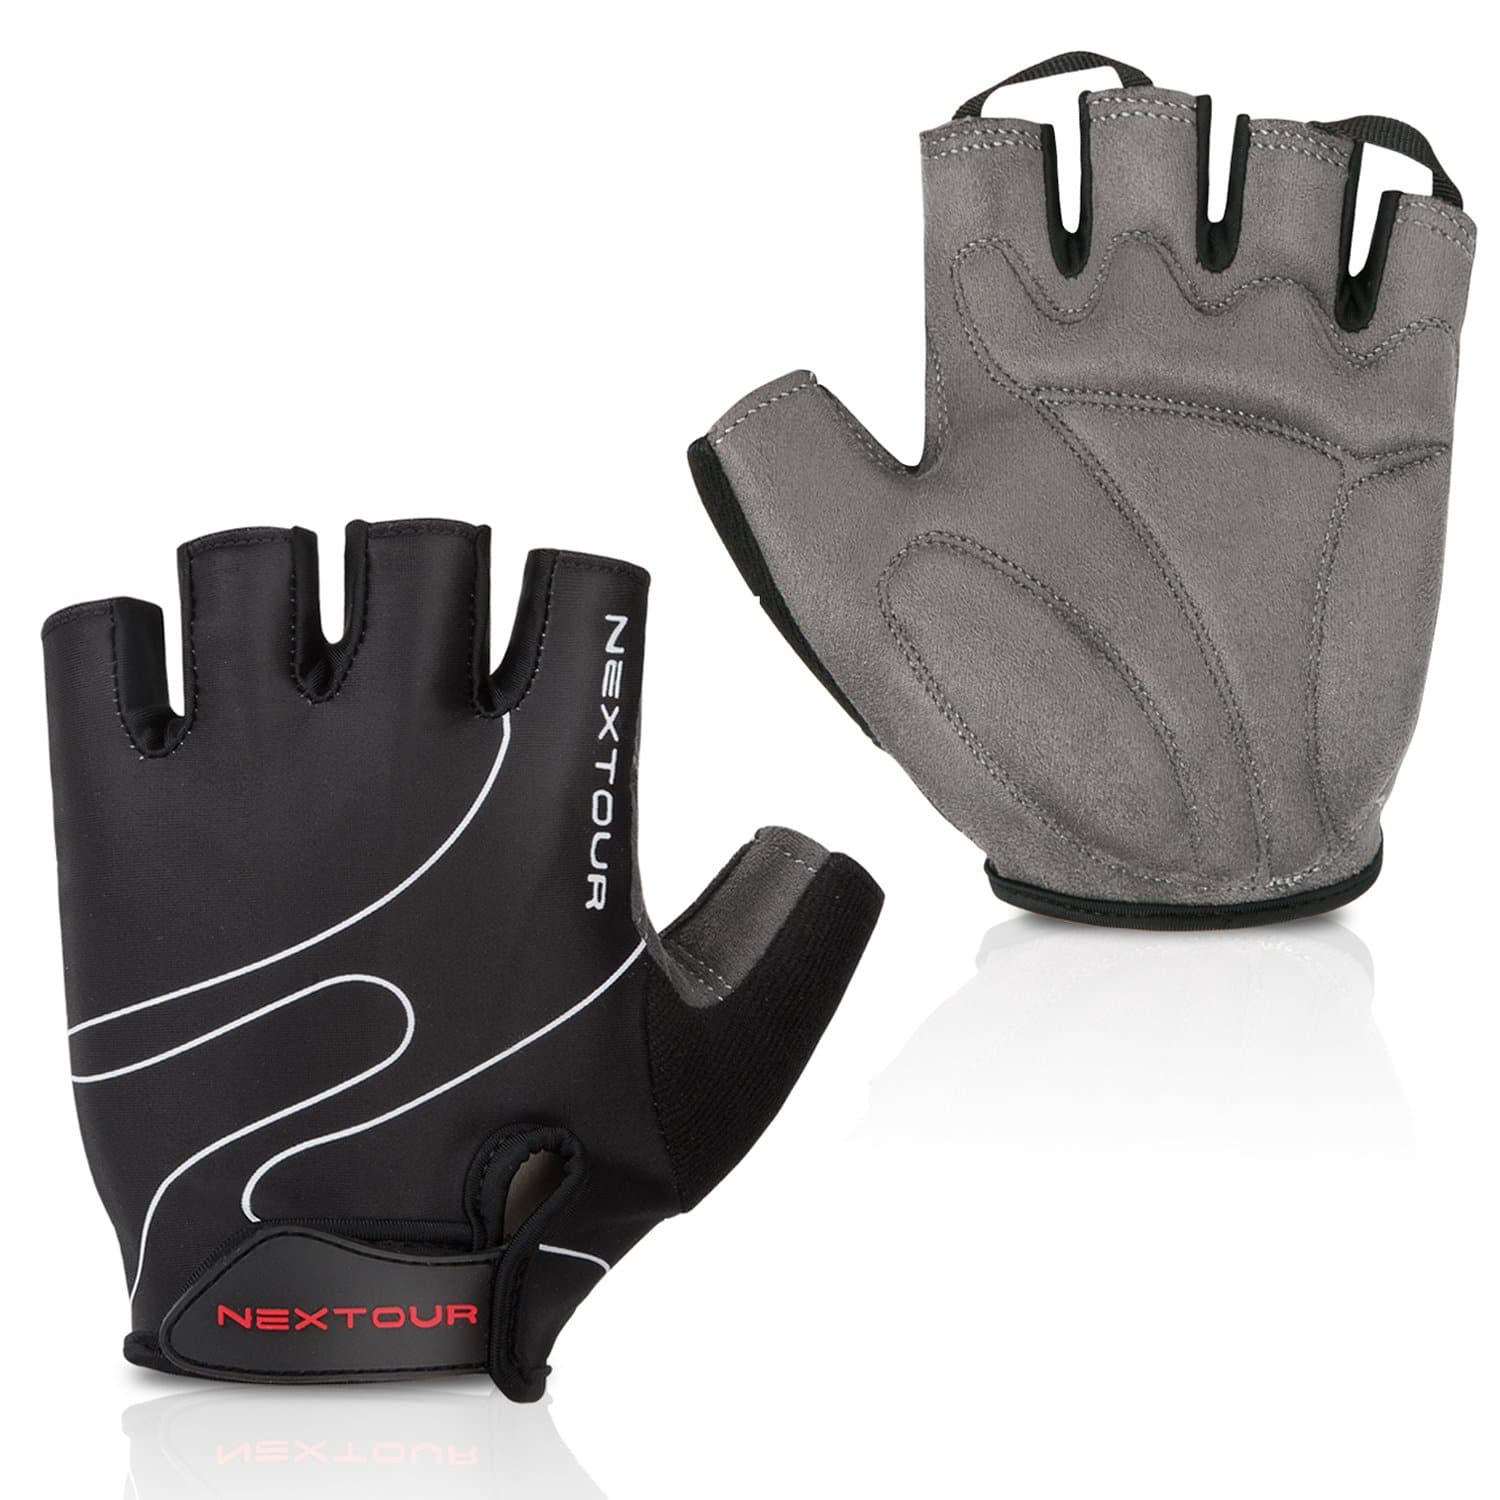 Tanluhu Half Finger Mountain Bike Gloves